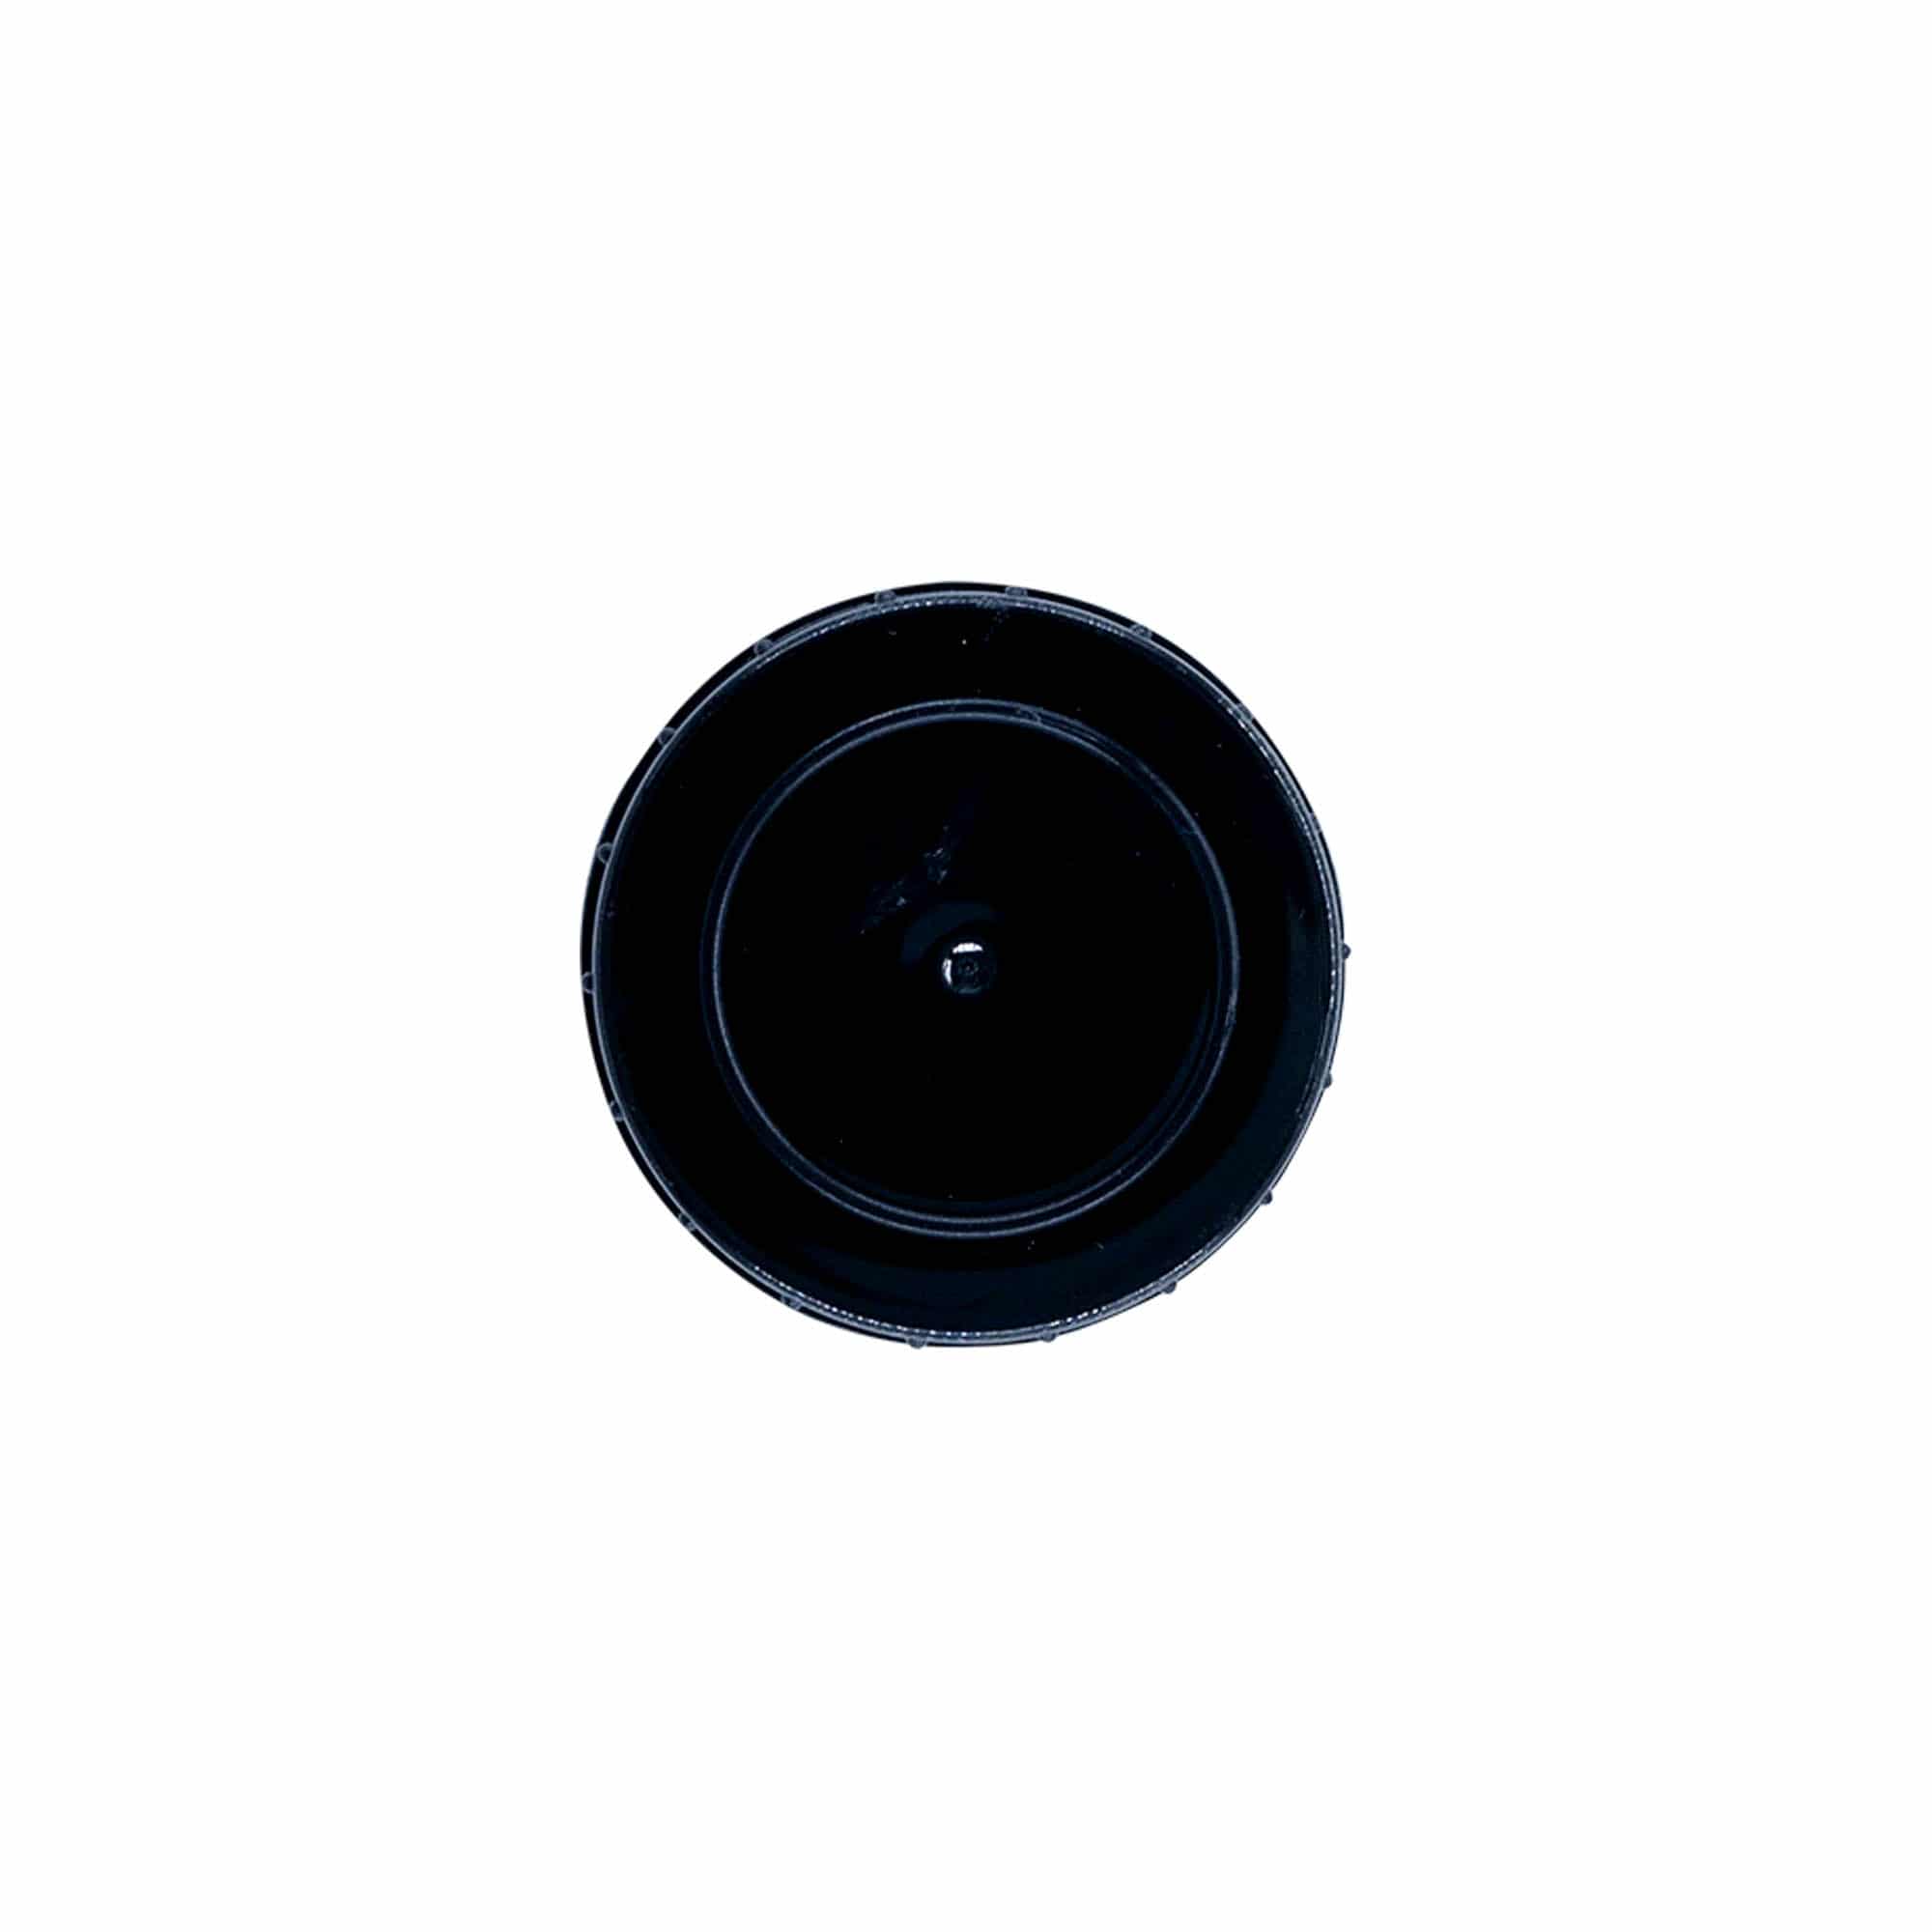 Screw cap, PP plastic, black, for opening: DIN 32